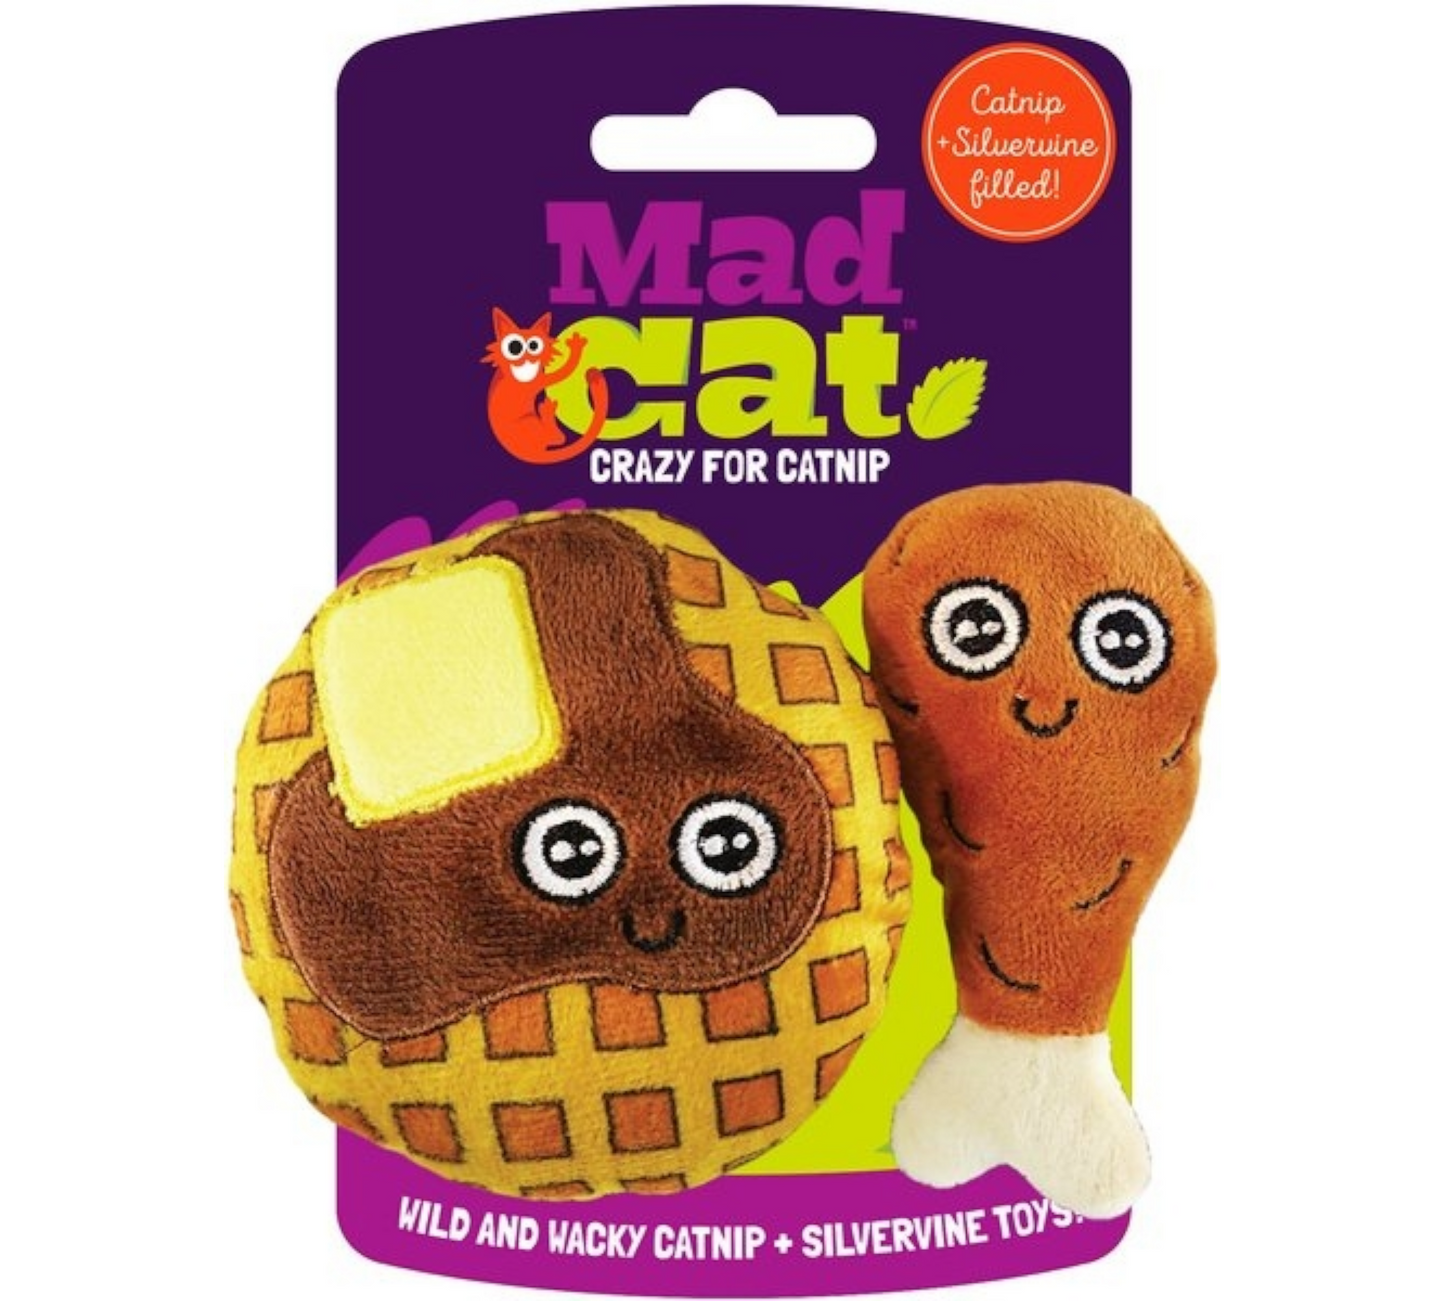 Canine's World Catnip Toys Mad Cat Chicken N' Waffles Catnip & Silvervine Cat Toy Mad Cat